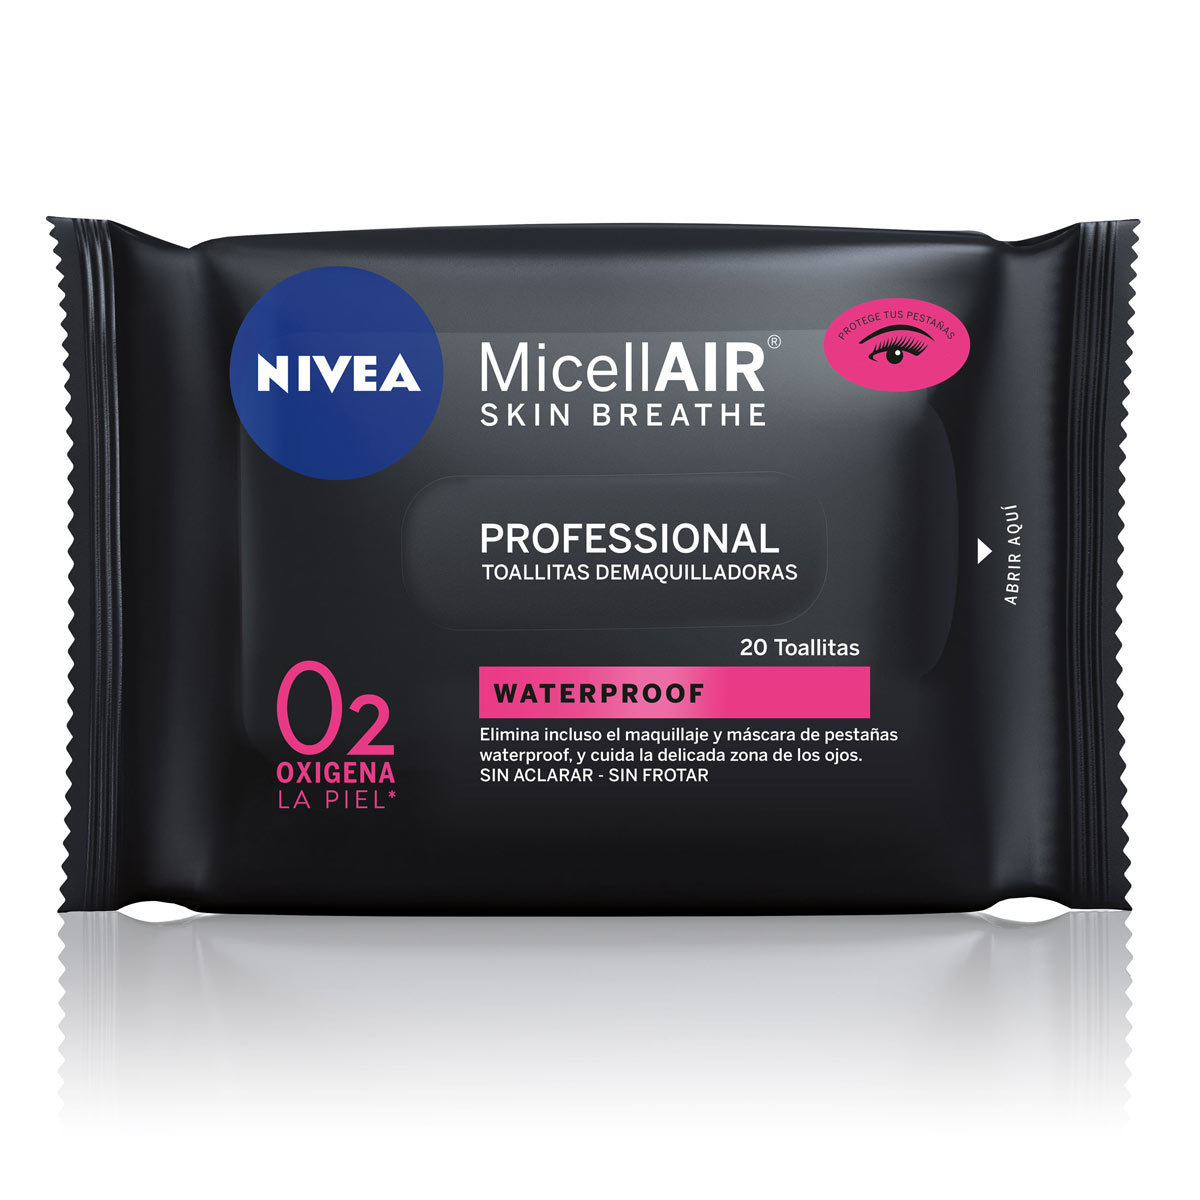 Toallitas Micellair Skin Breathe Professional Waterproof, de Nivea (2 euros).